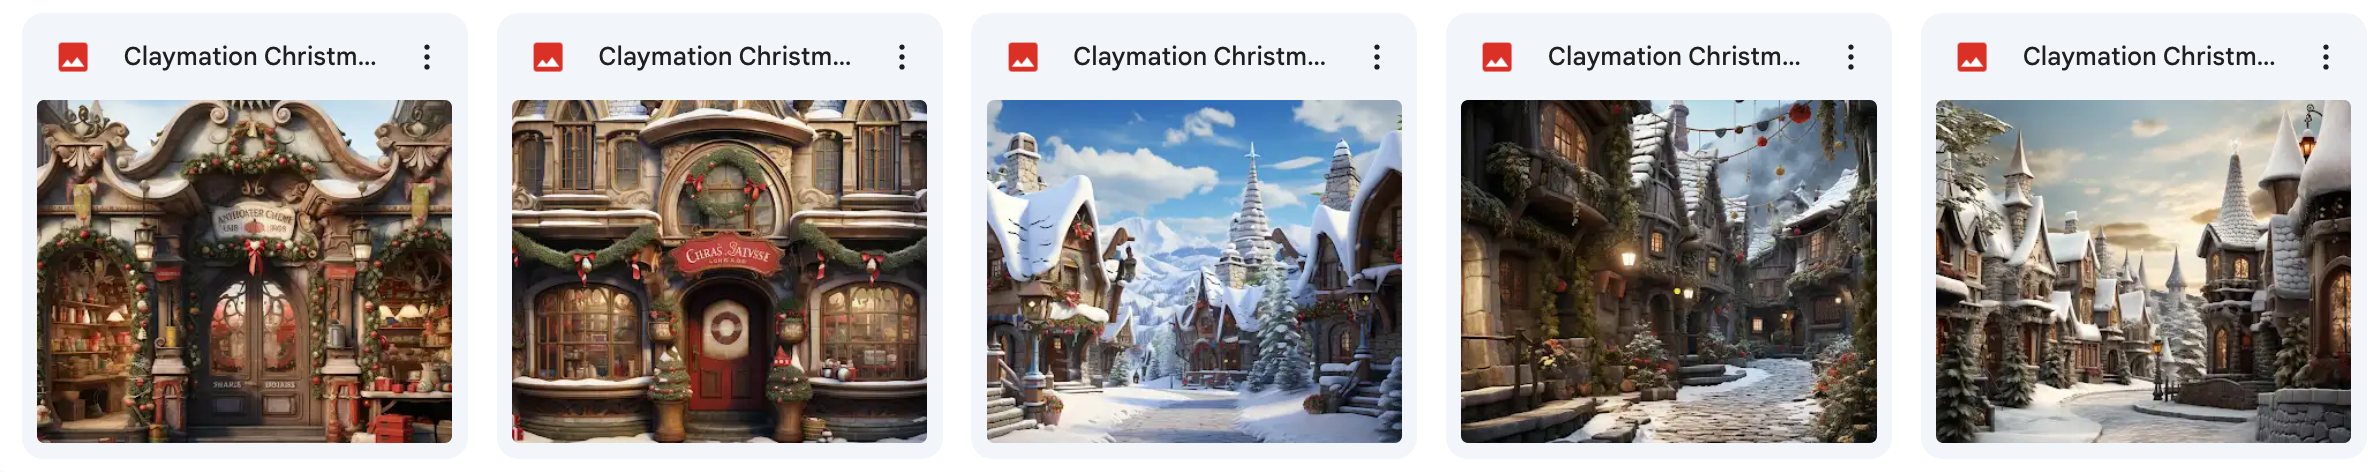 Claymation Christmas Asset Pack - Meg Bitton Productions